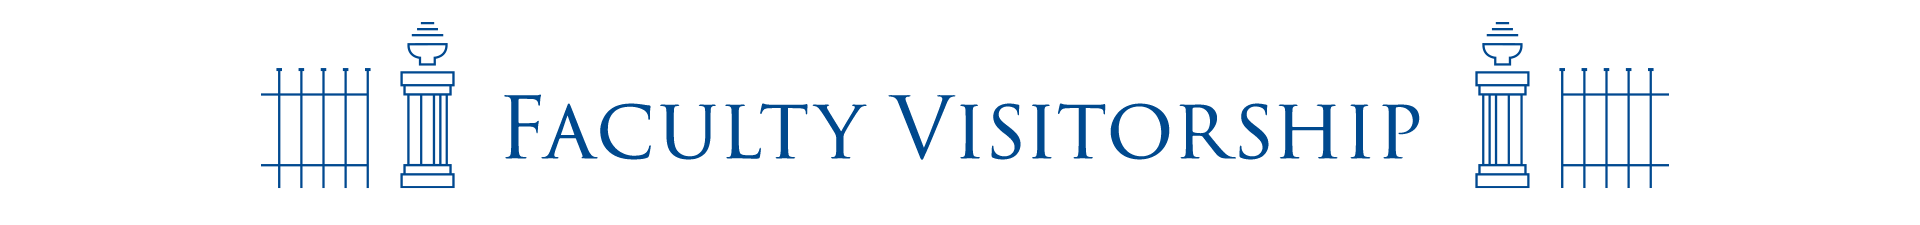 Faculty Visitorship